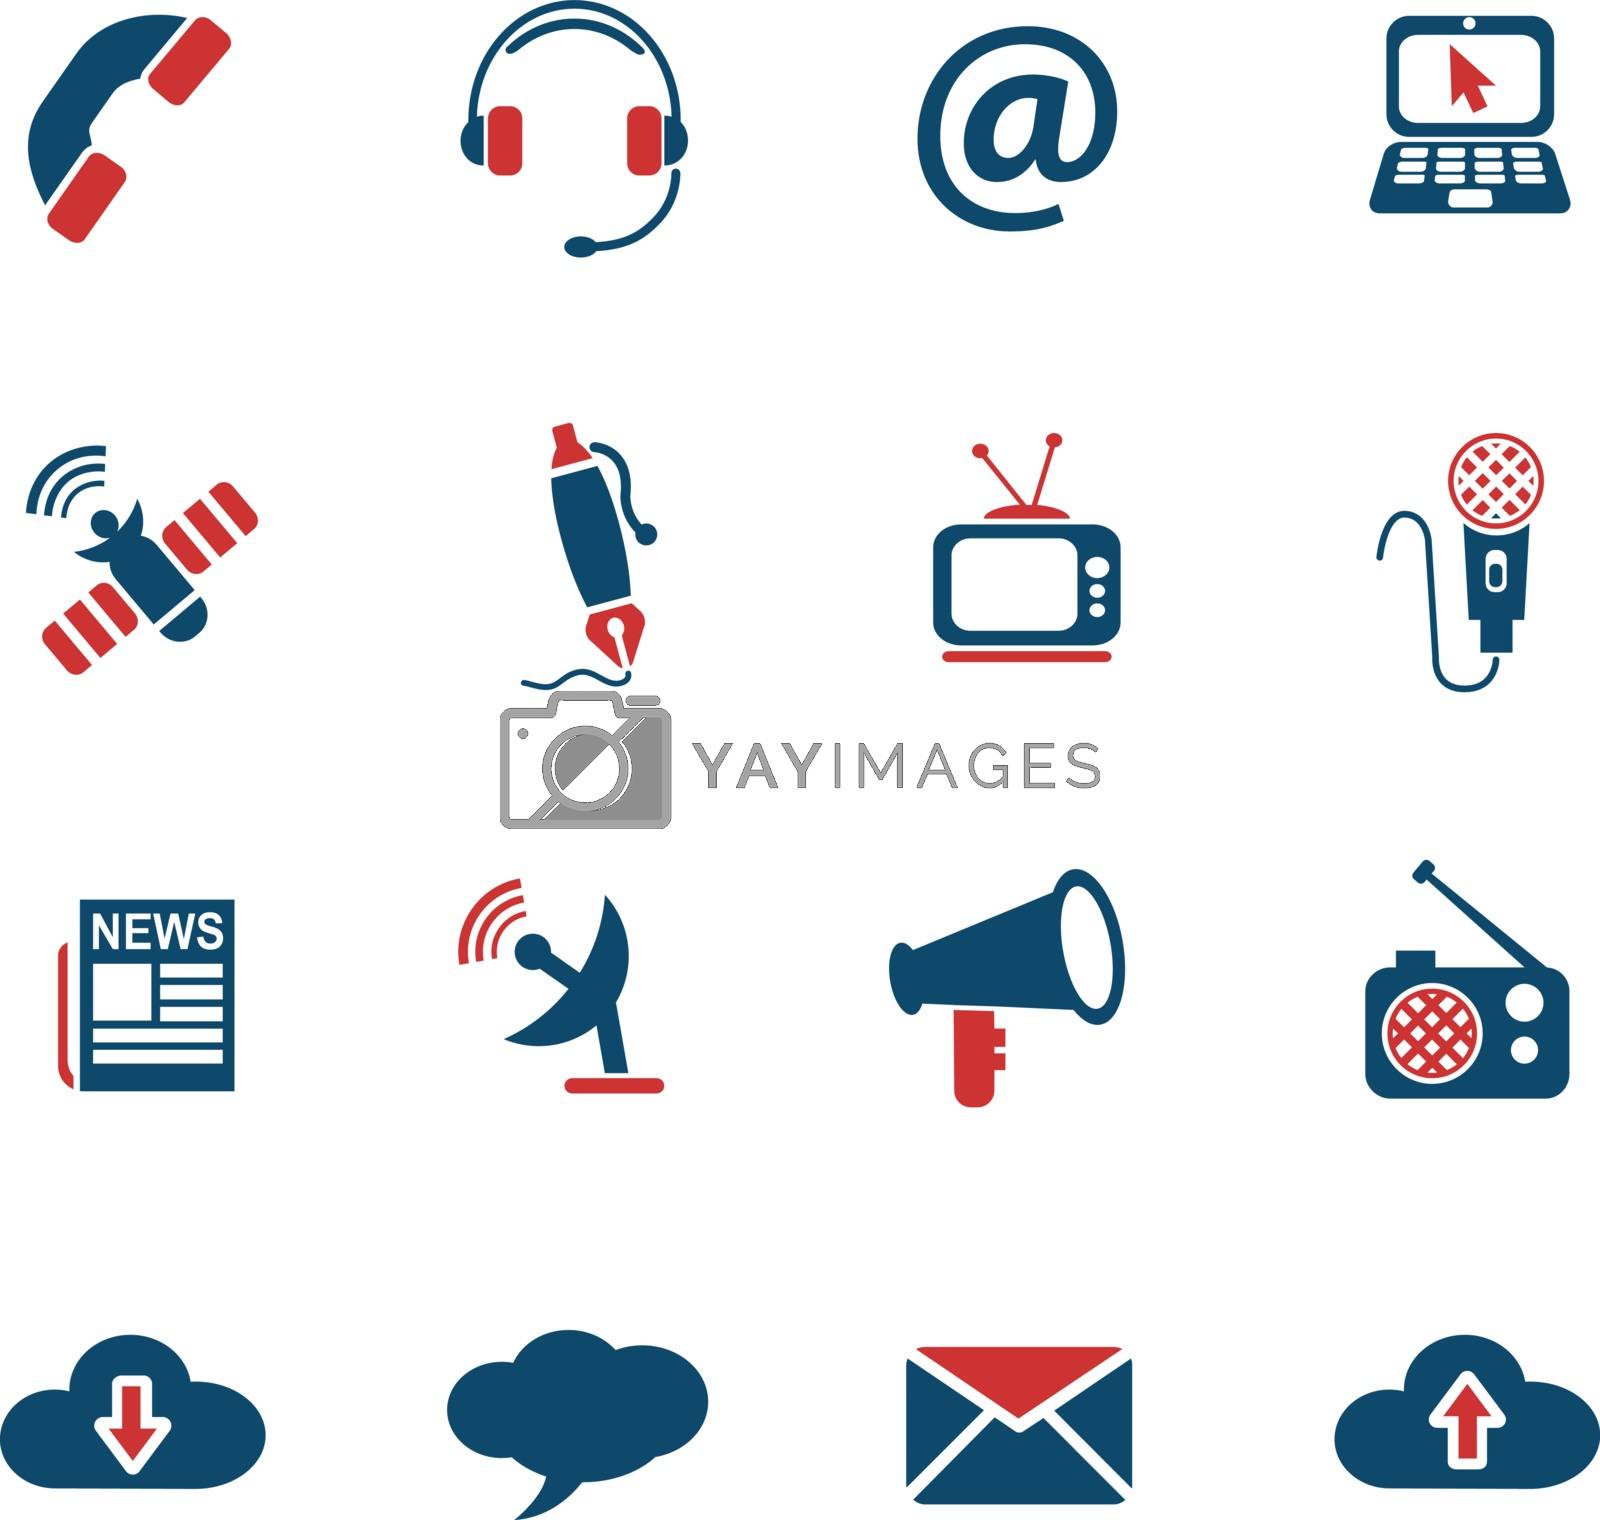 Royalty free image of communication icon set by ayax